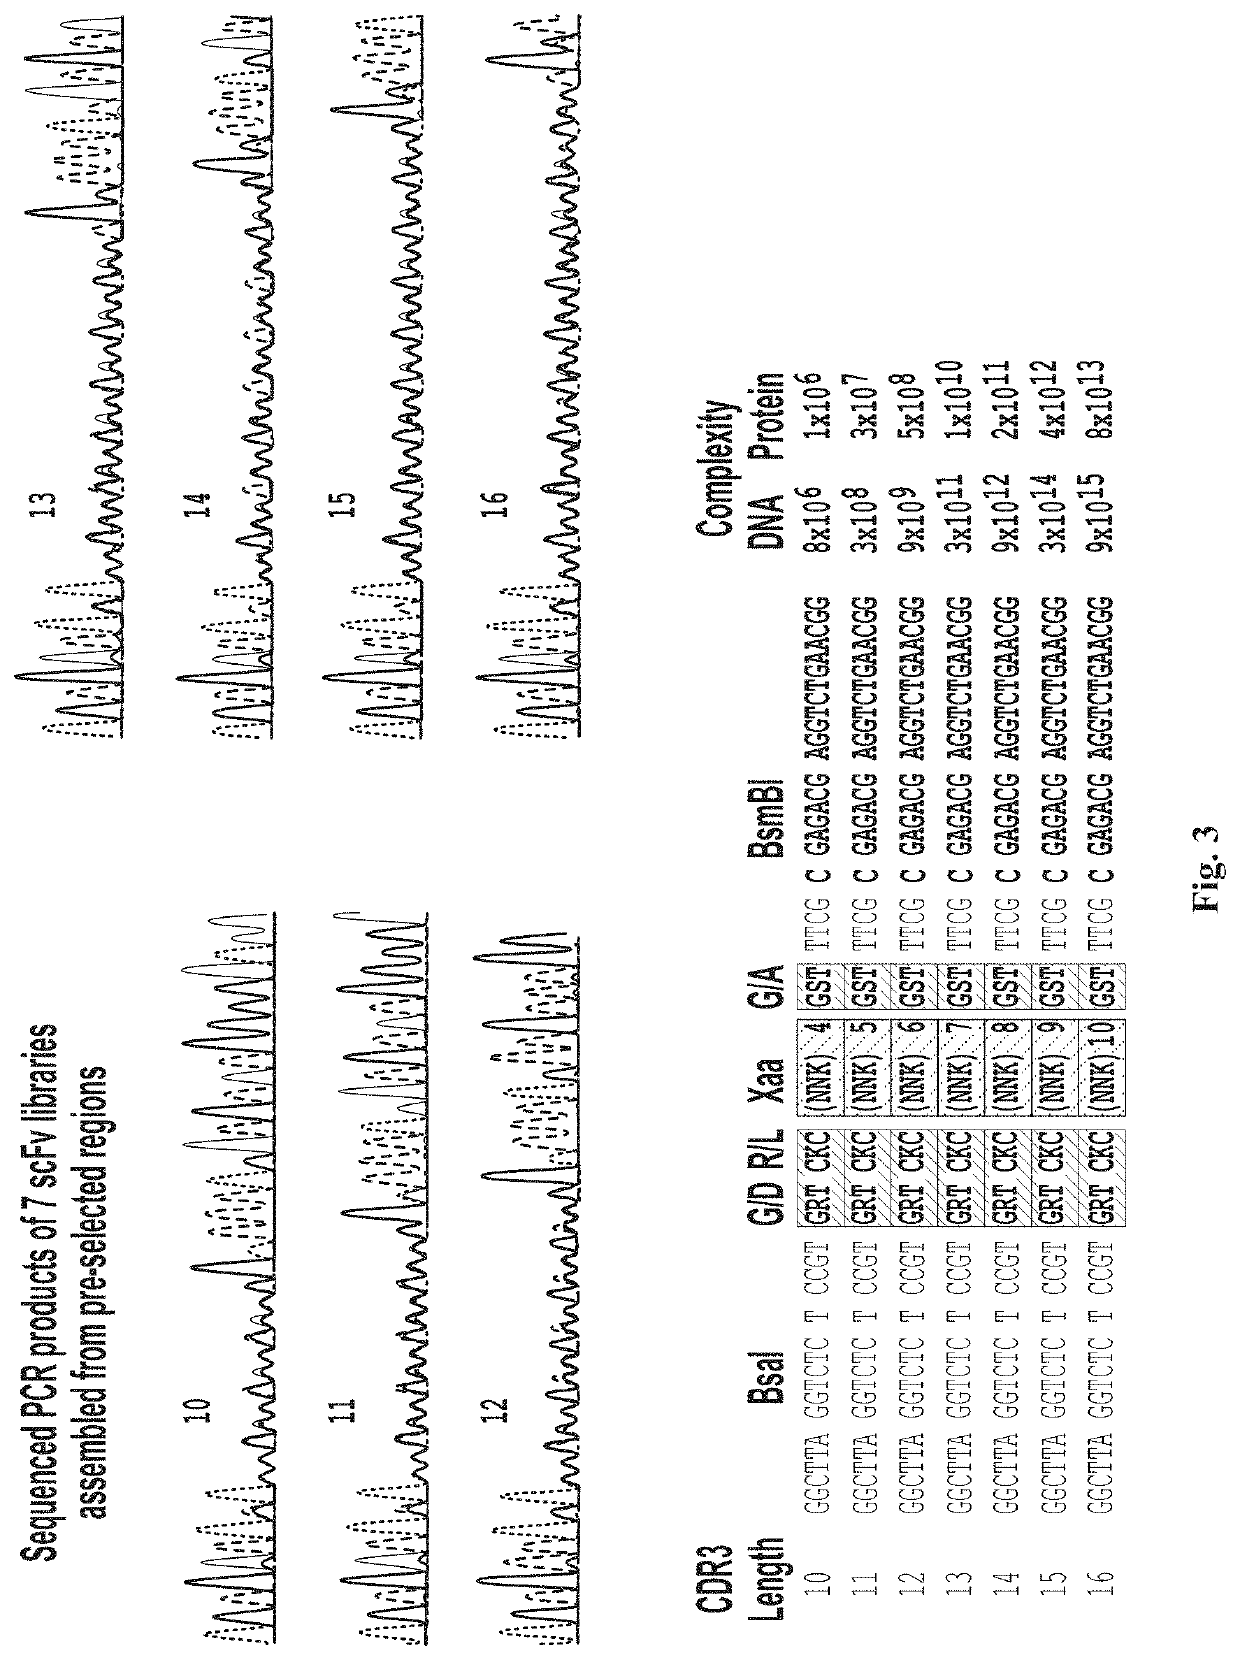 mRNA display antibody library and methods